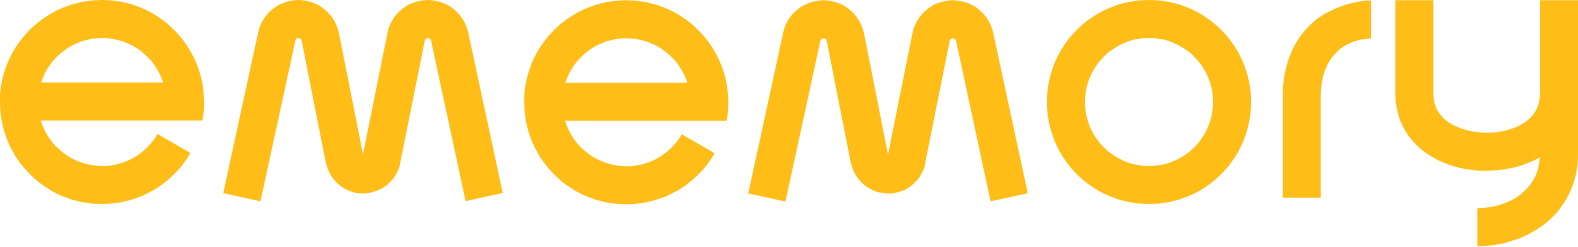 eMemory Technology logo large (transparent PNG)